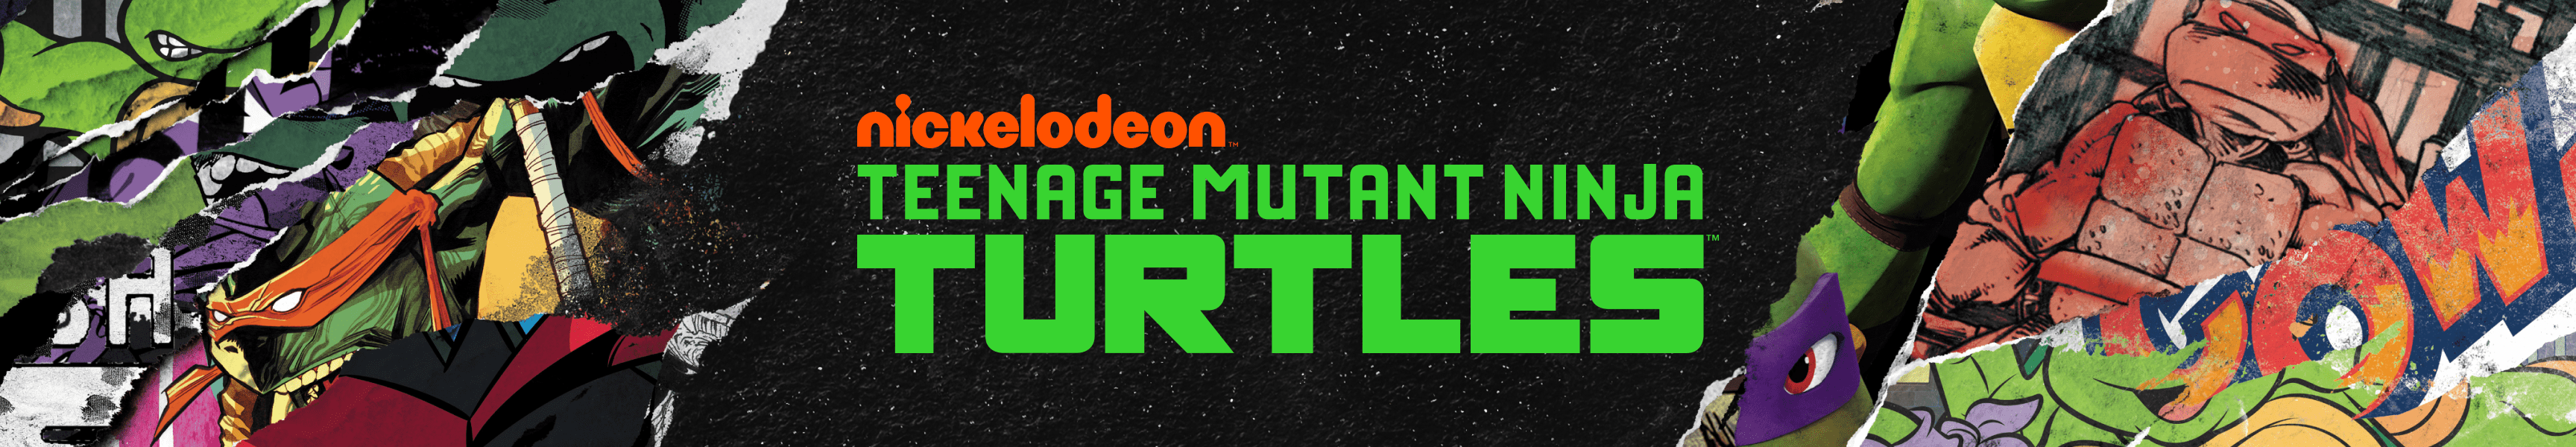 Teenage Mutant Ninja Turtles Men's Accessories